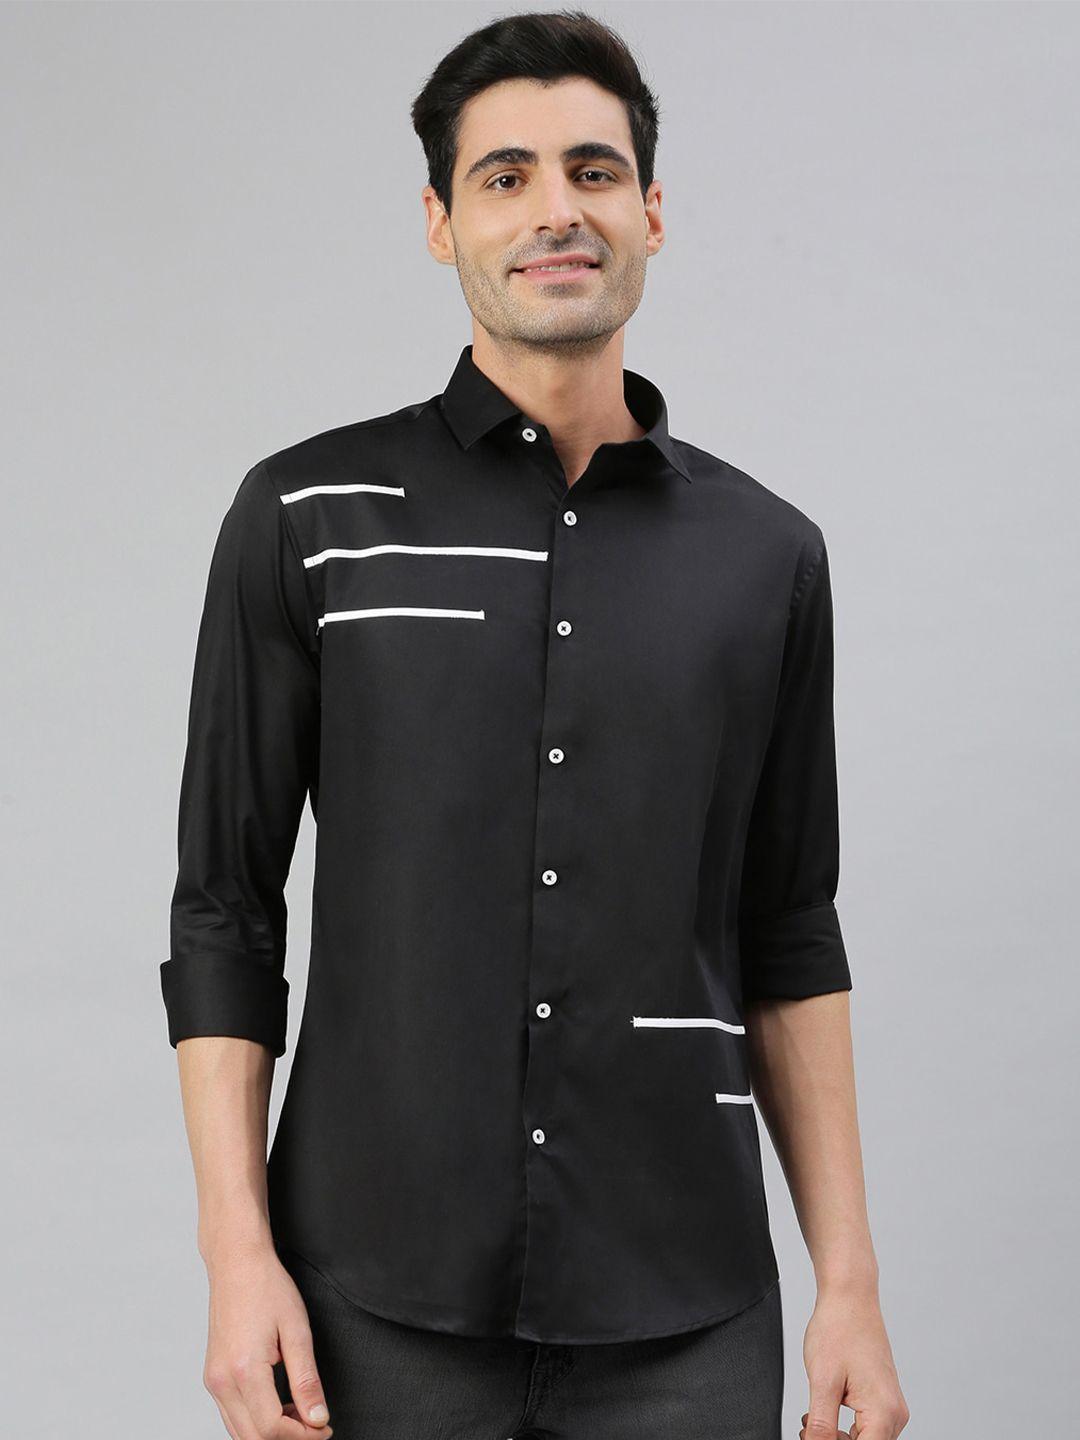 mr-button-men-black-&-white-smart-slim-fit-striped-cotton-casual-shirt